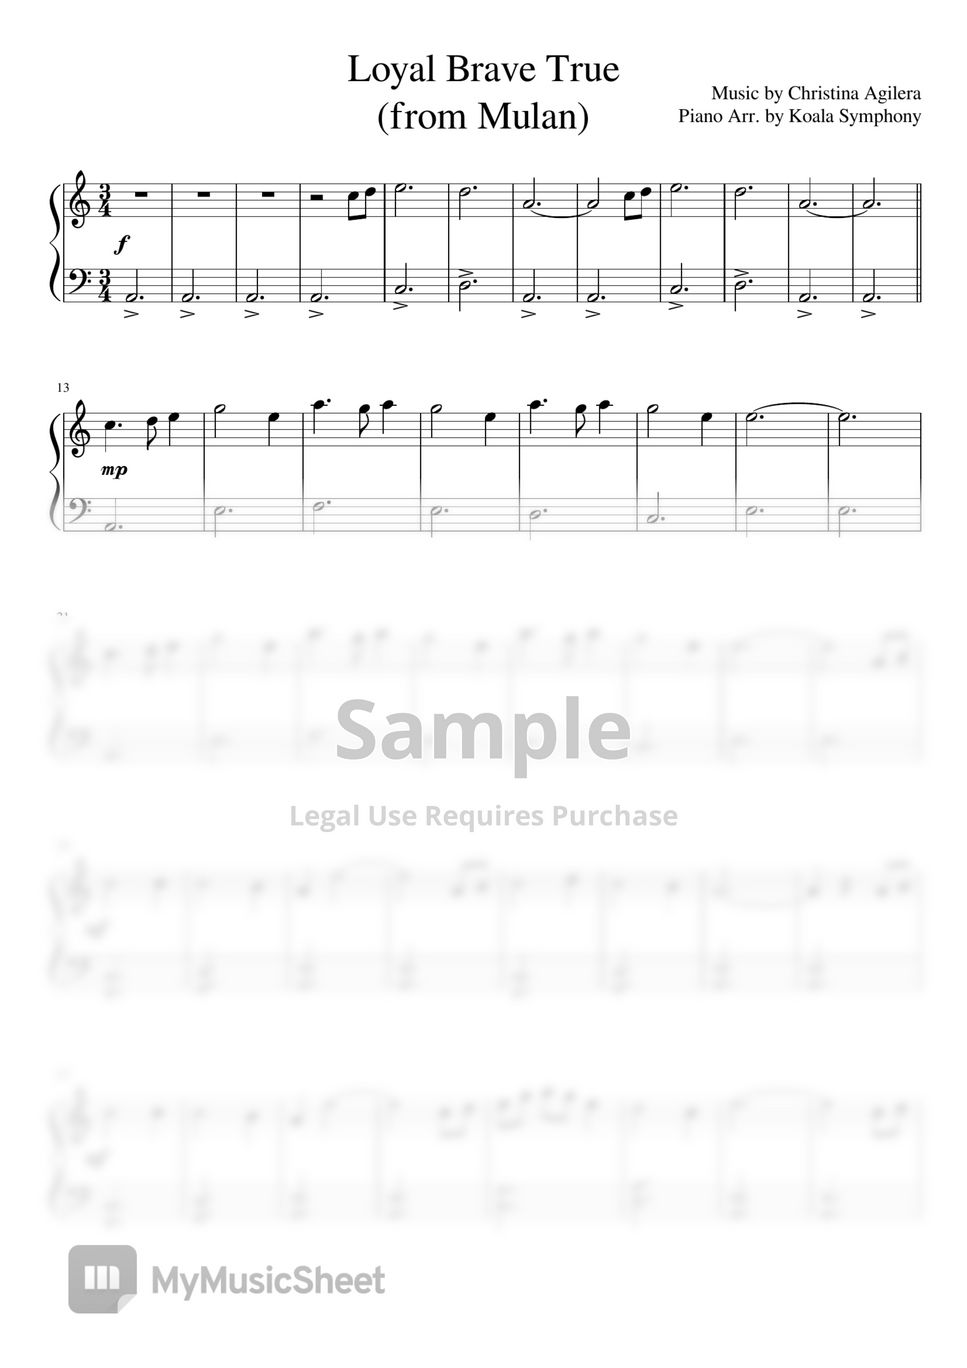 Christina Aguilera - Loyal Brave True (from Mulan 2020) Very easy ver. by Koala Symphony